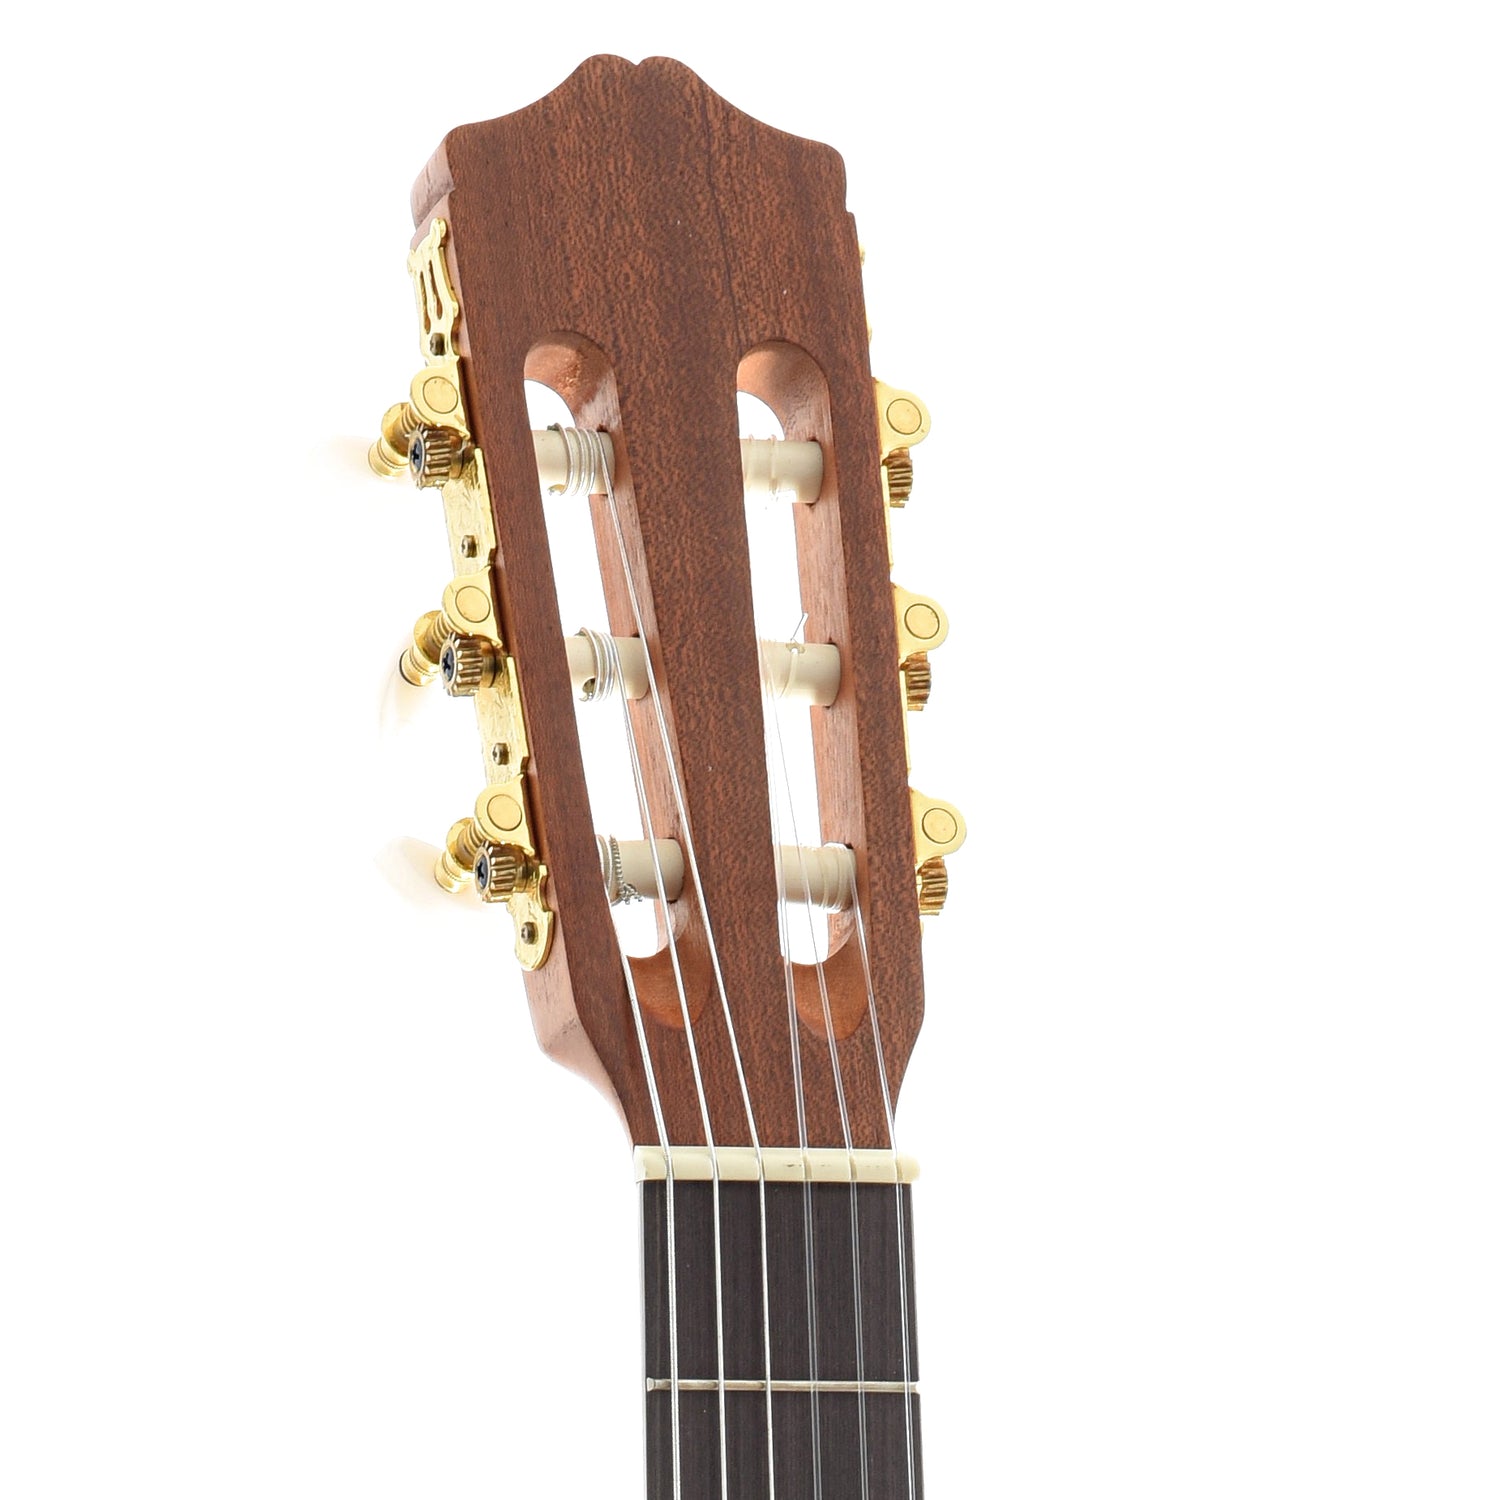 Image 6 of Cordoba Protege C1M (recent) - SKU# 28U-201864 : Product Type Classical & Flamenco Guitars : Elderly Instruments